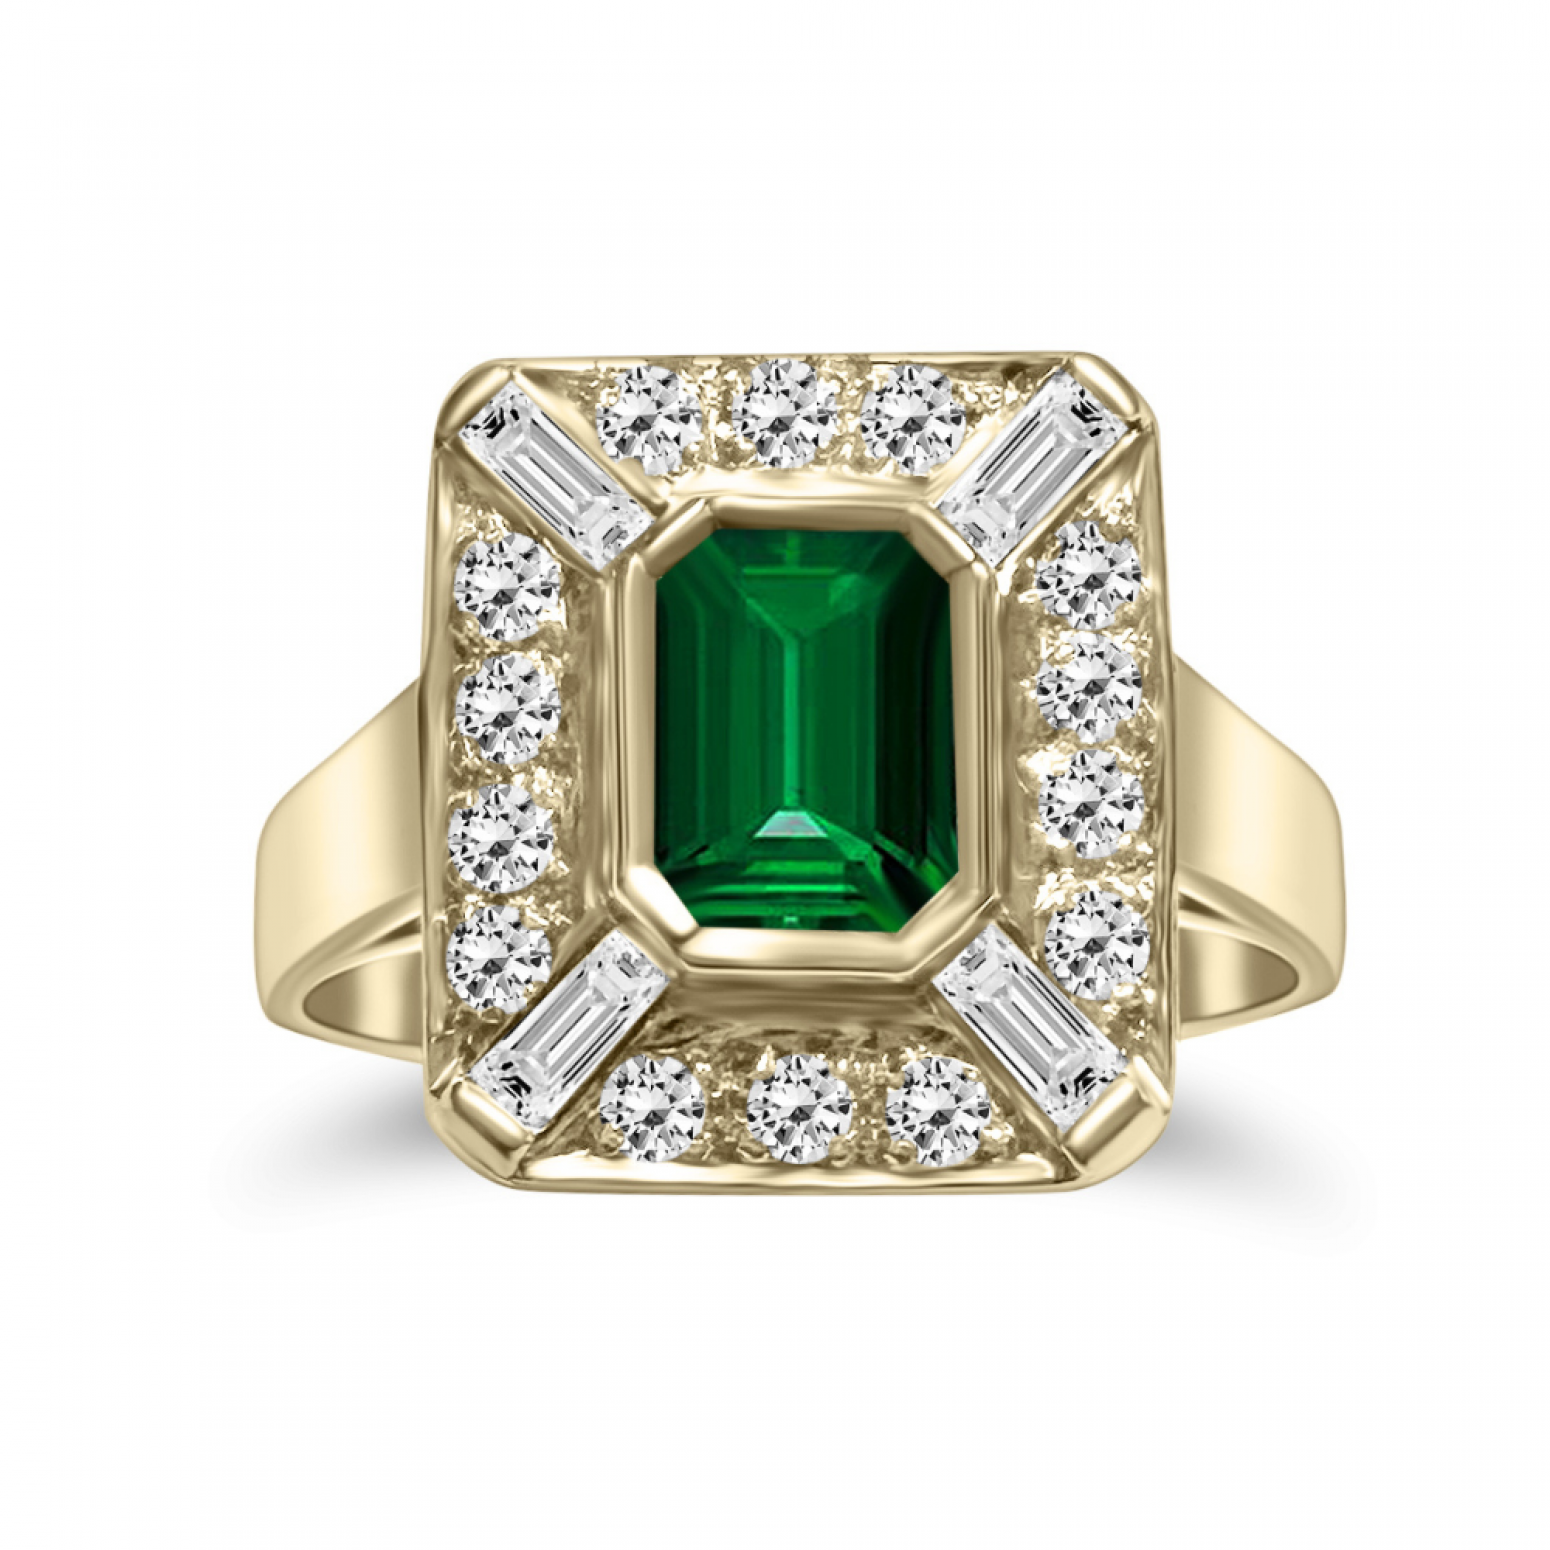 Ring 18K gold with emerald 0.70ct and diamonds VS2, F from IGL da4317 ENGAGEMENT RINGS Κοσμηματα - chrilia.gr